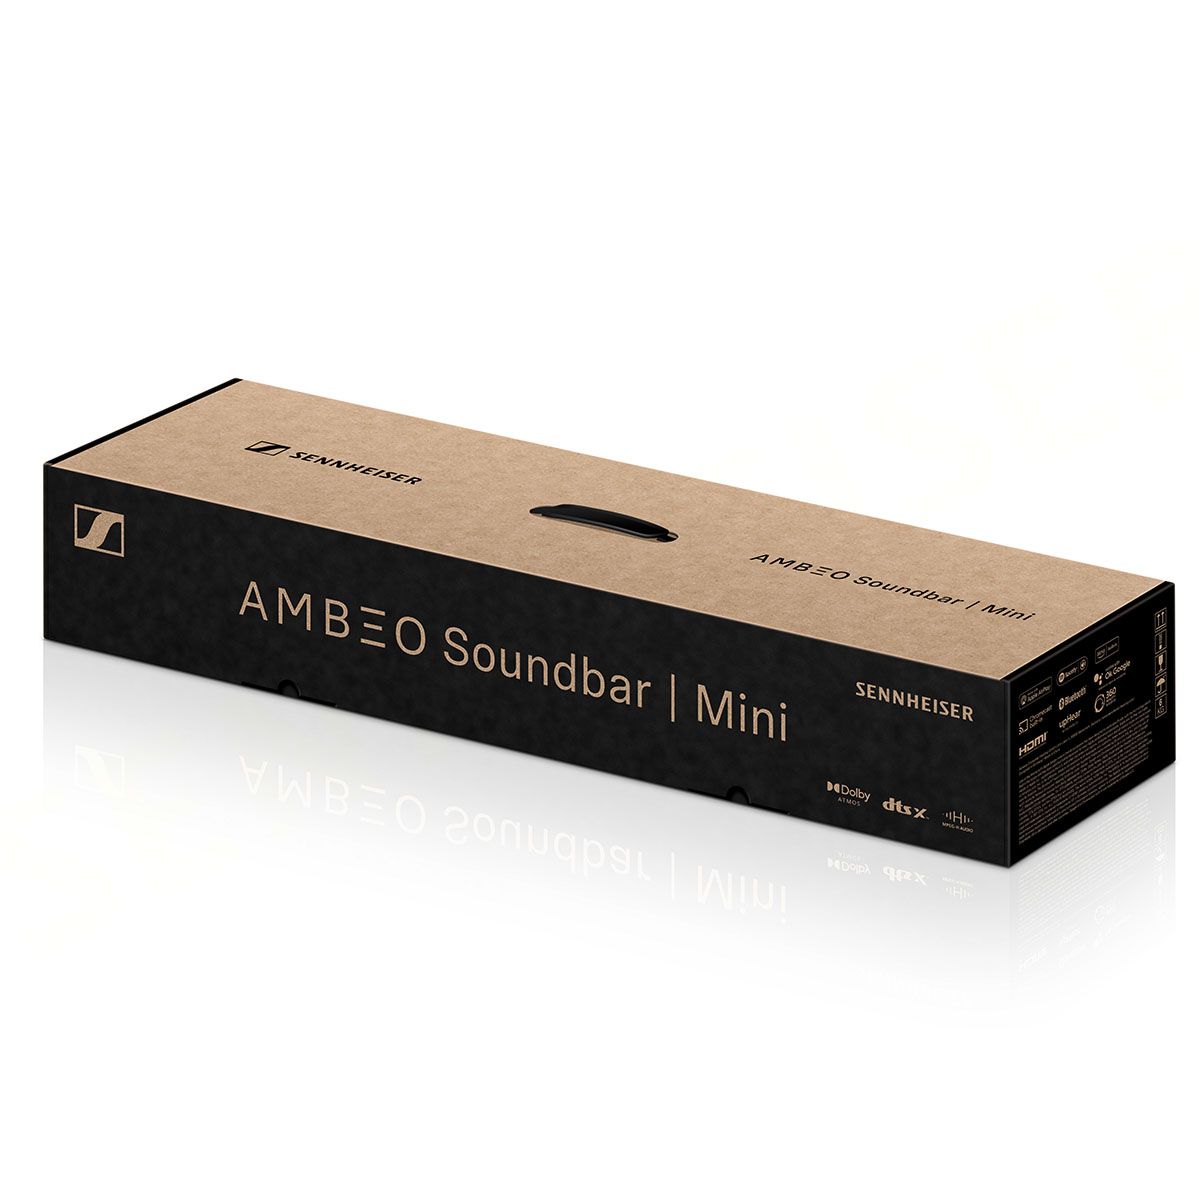 Packaging of Sennheiser Ambeo Soundbar Mini on white background at an angle